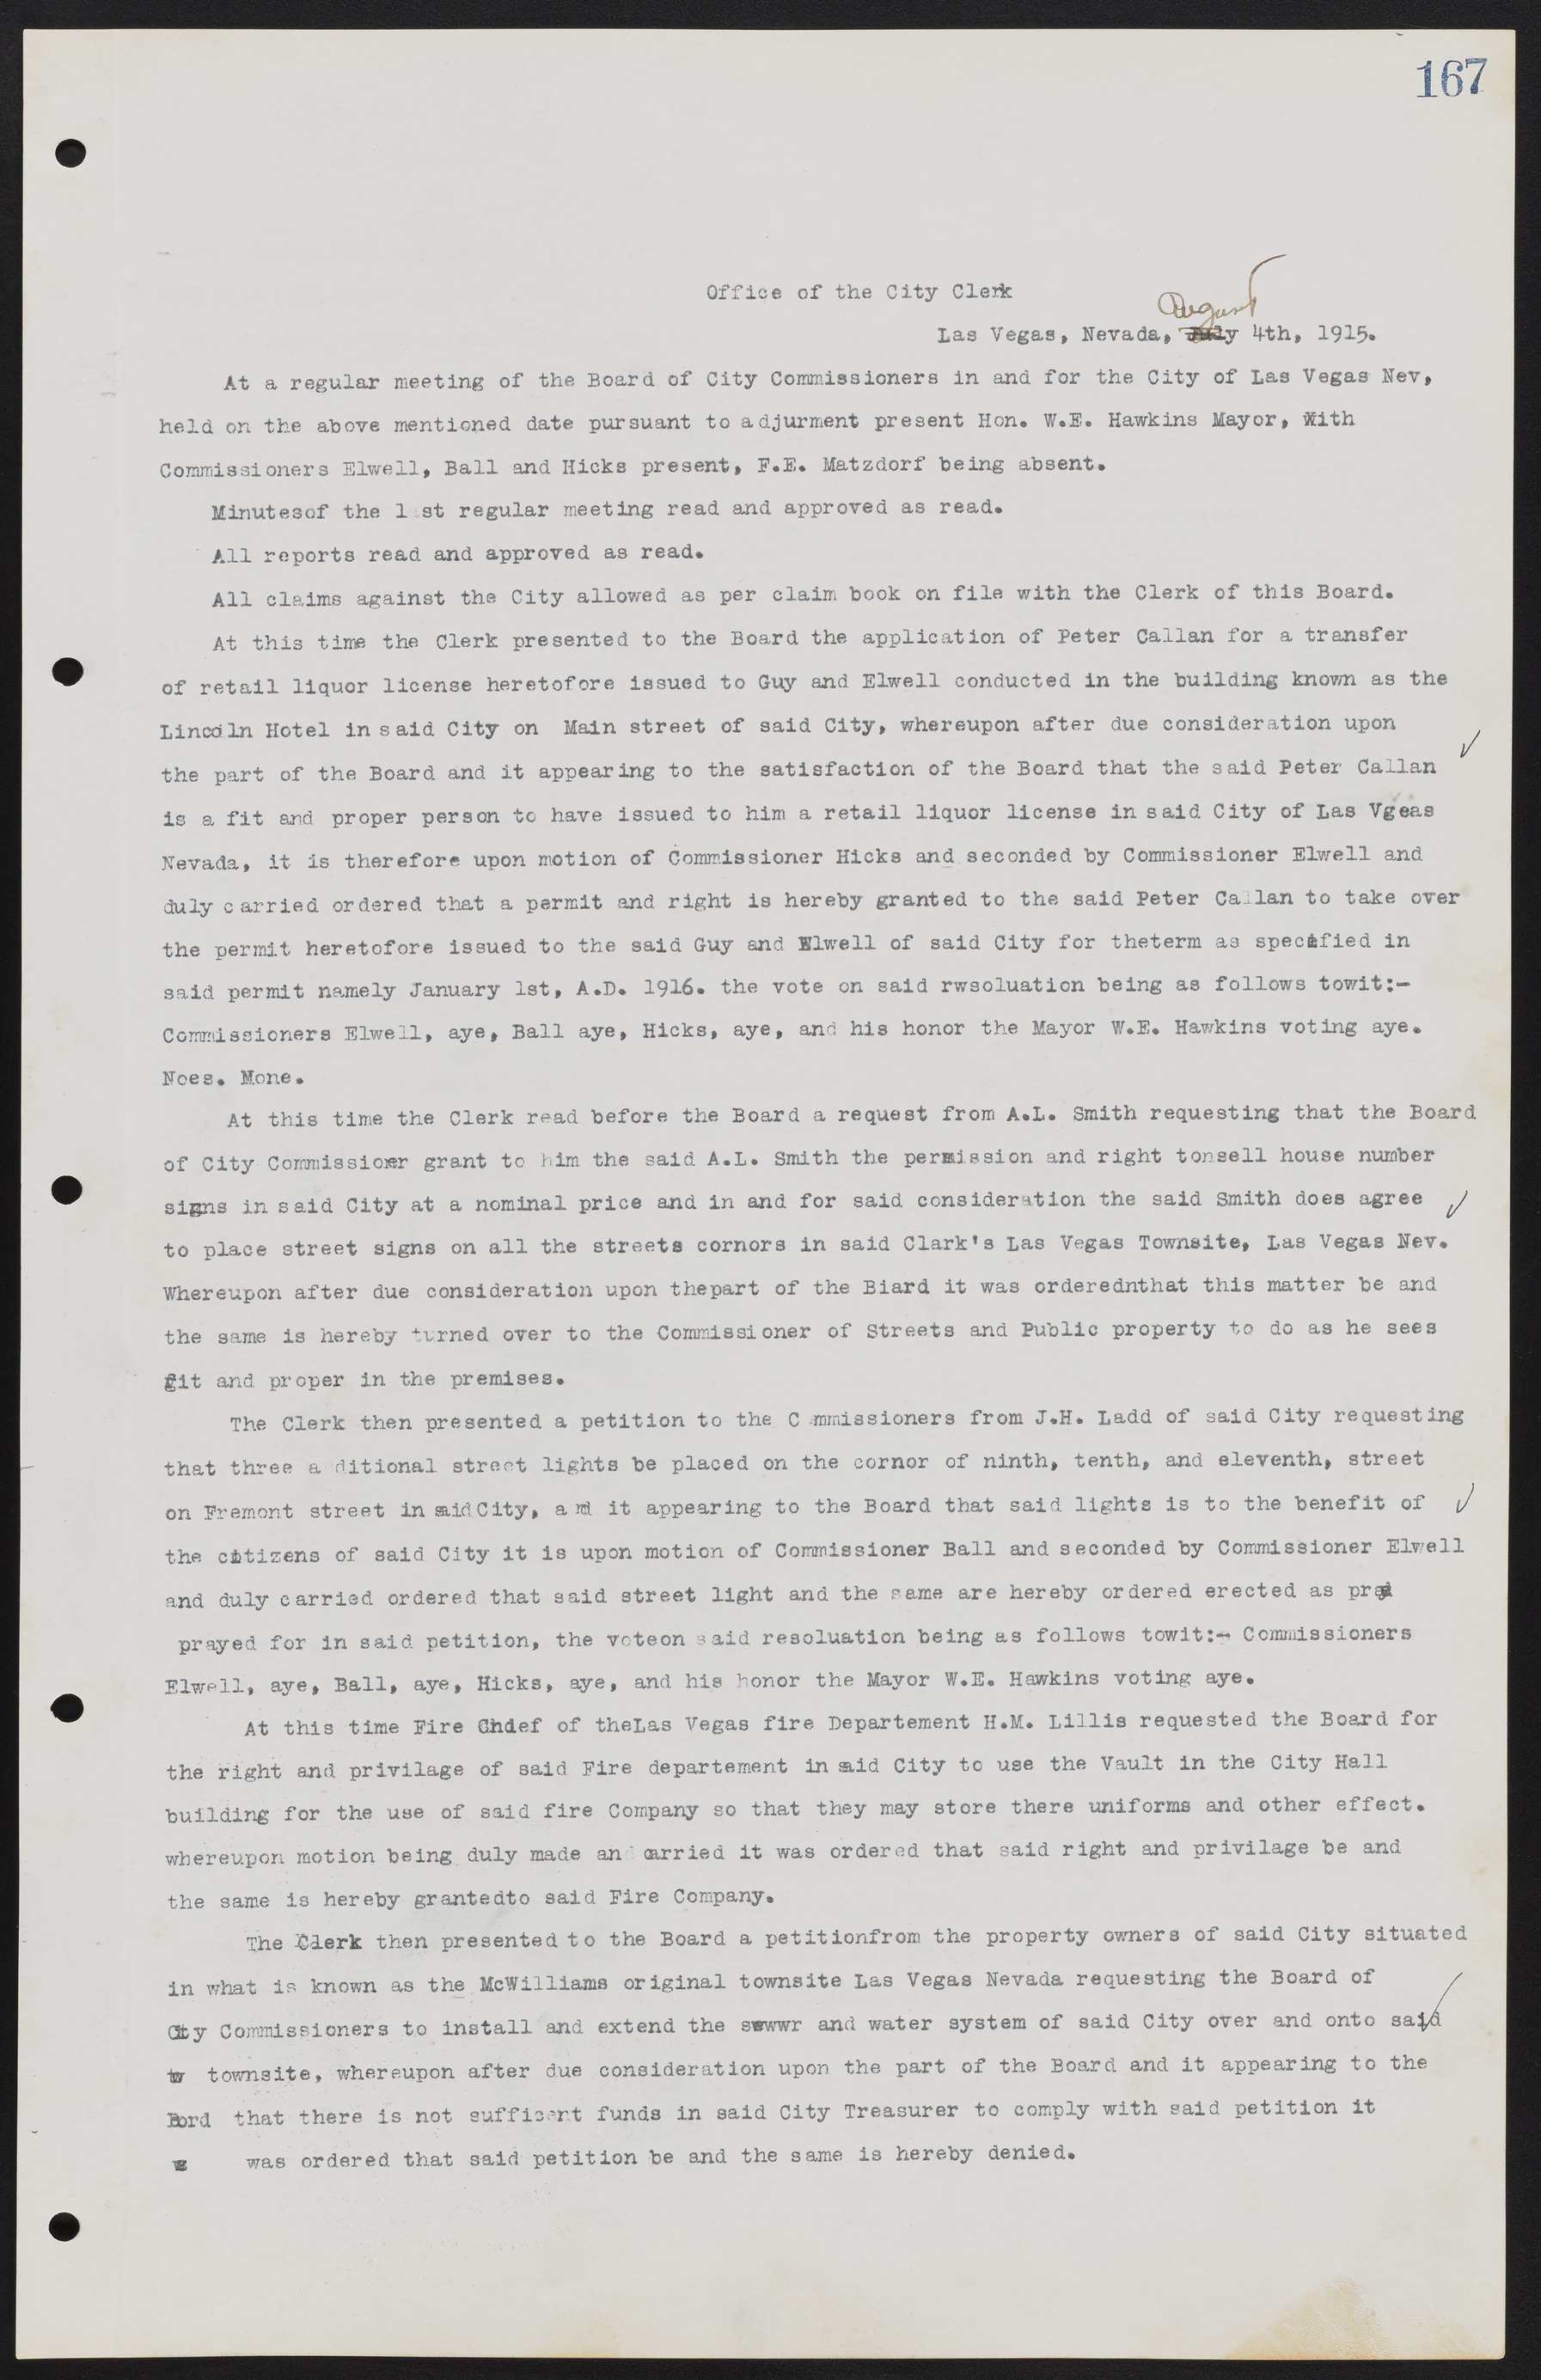 Las Vegas City Commission Minutes, June 22, 1911 to February 7, 1922, lvc000001-183